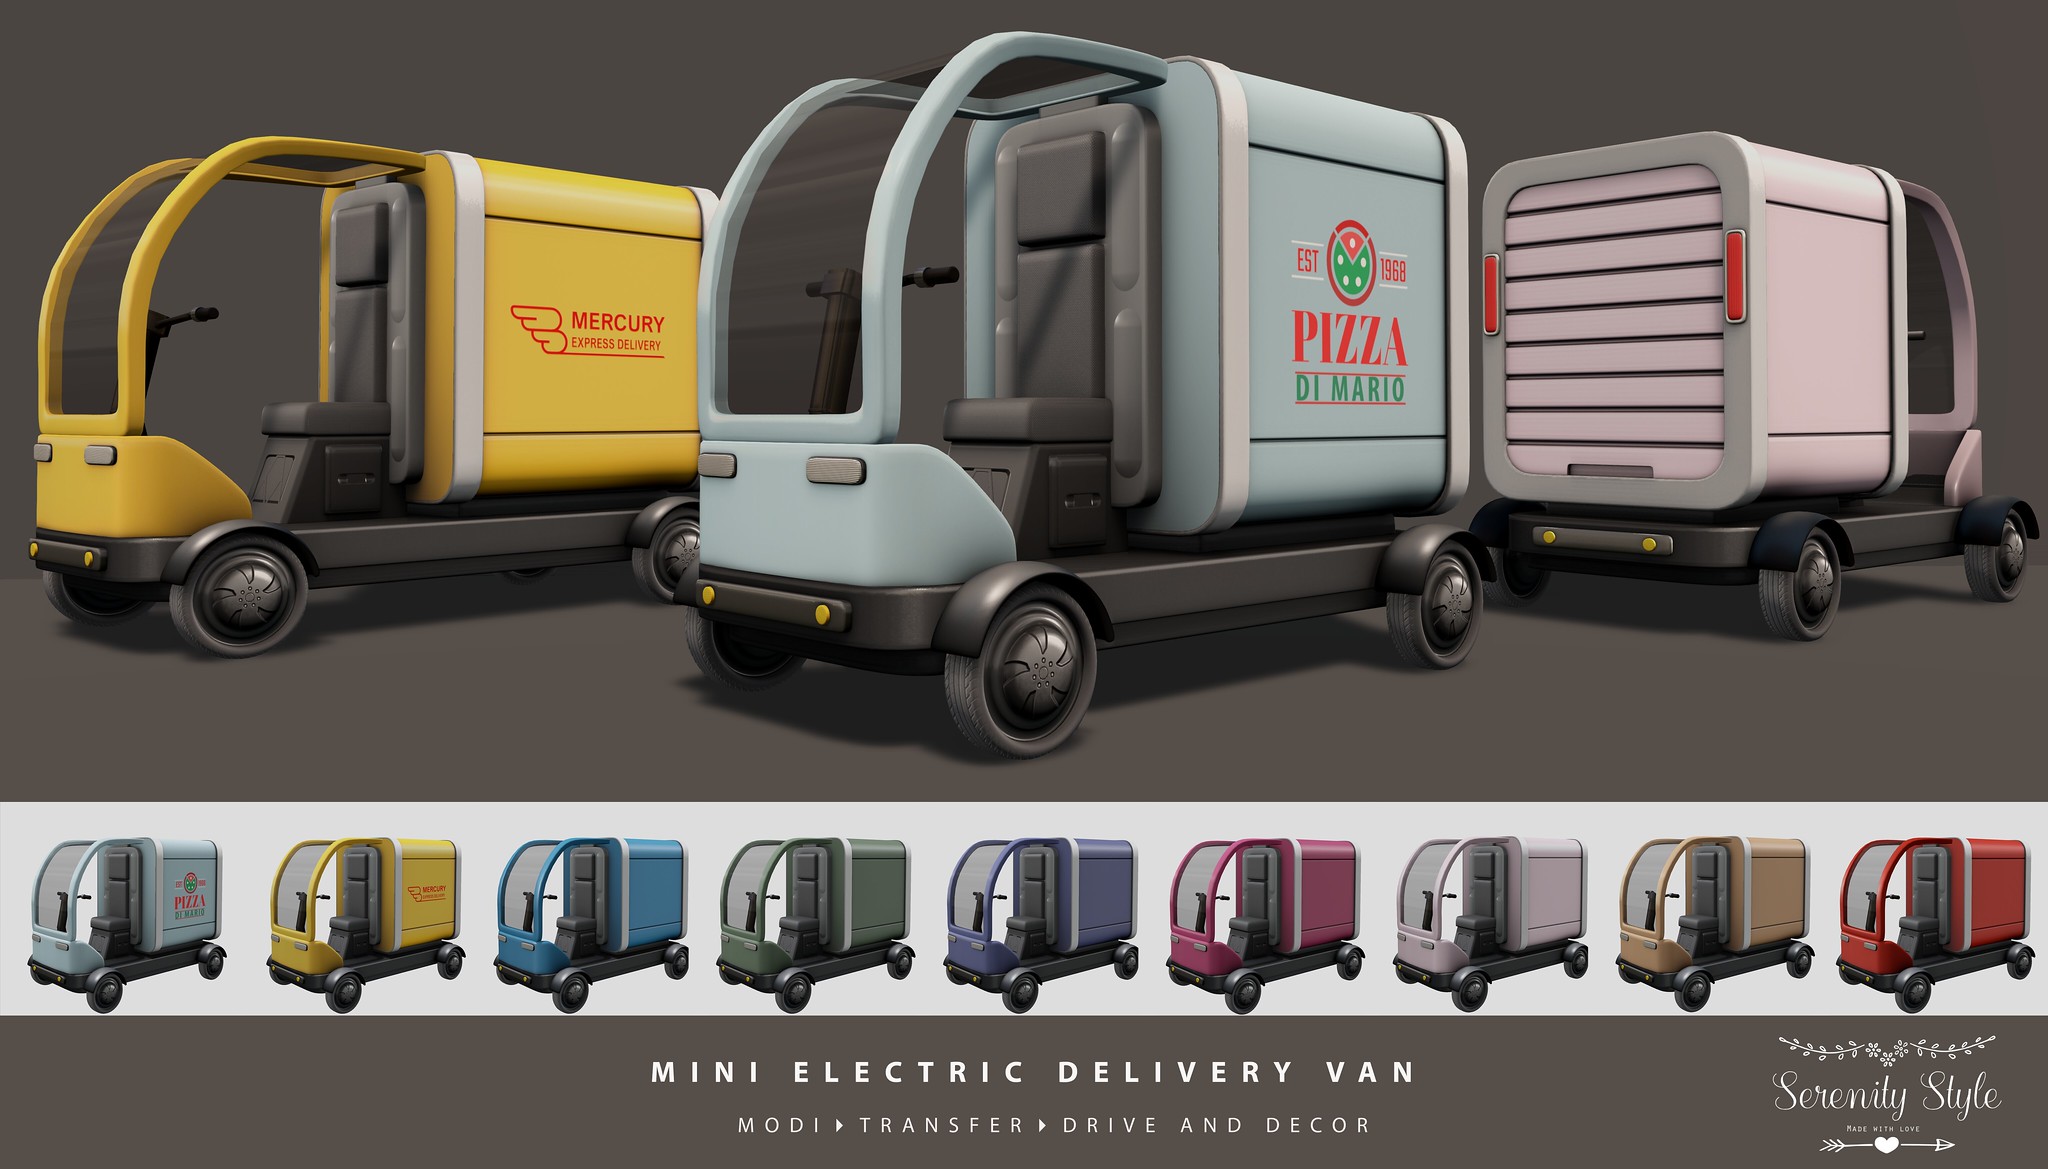 Serenity Style – Mini Electric Delivery Van